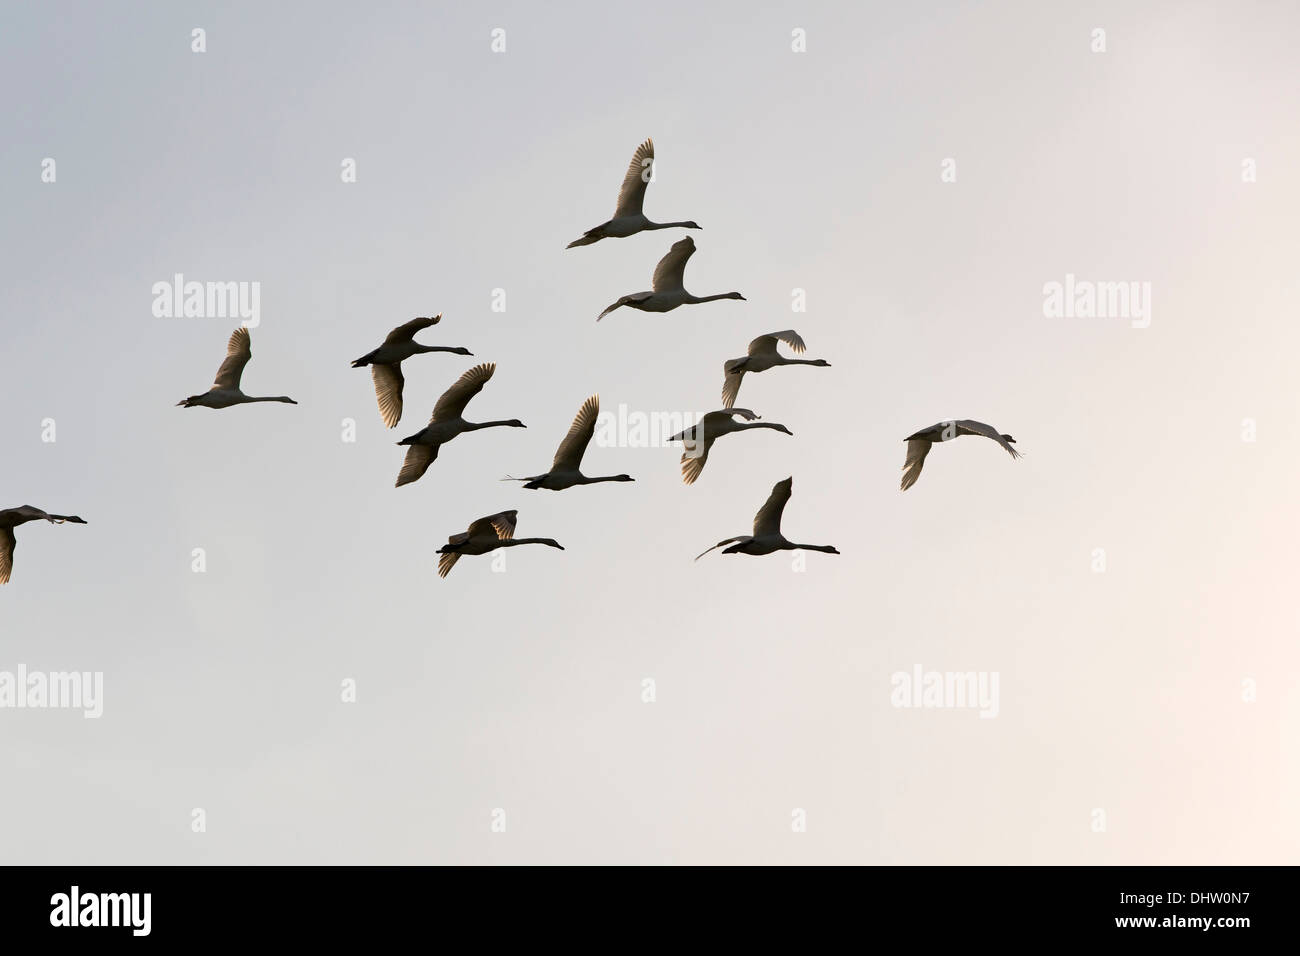 Netherlands, Loosdrecht, Flock of mute swans flying Stock Photo